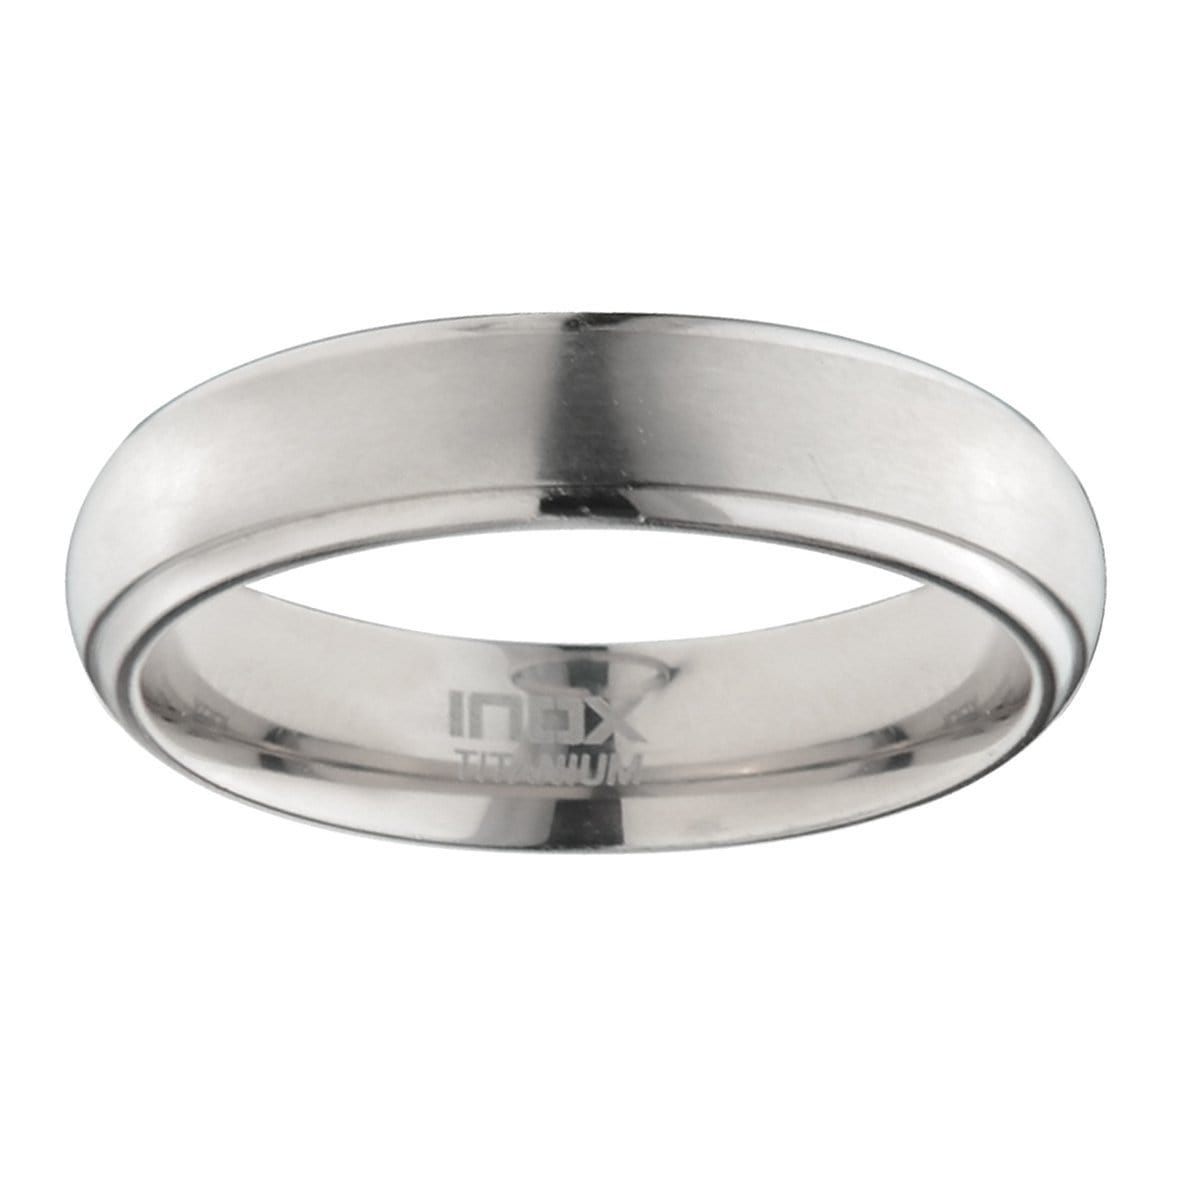 INOX JEWELRY Rings Silver Tone Titanium 5mm Matt and Polished Edge Band Ring